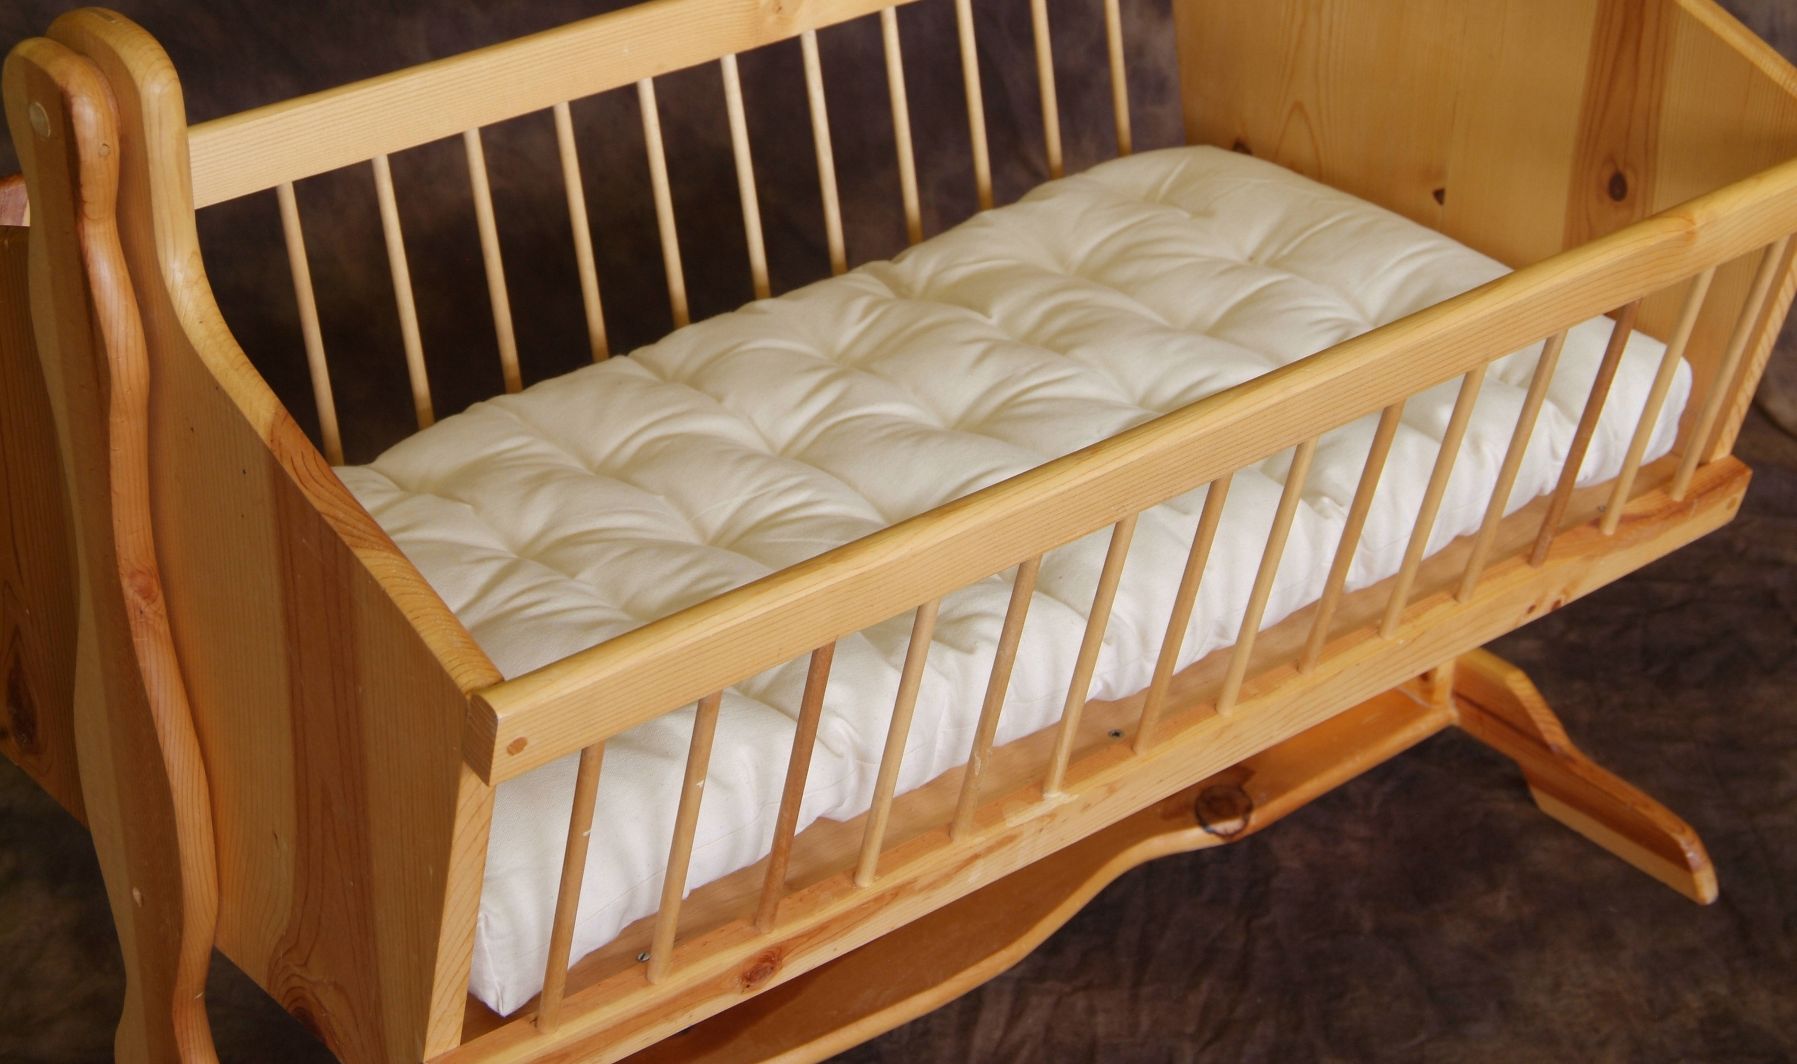 new lullago bassinet mattress cover